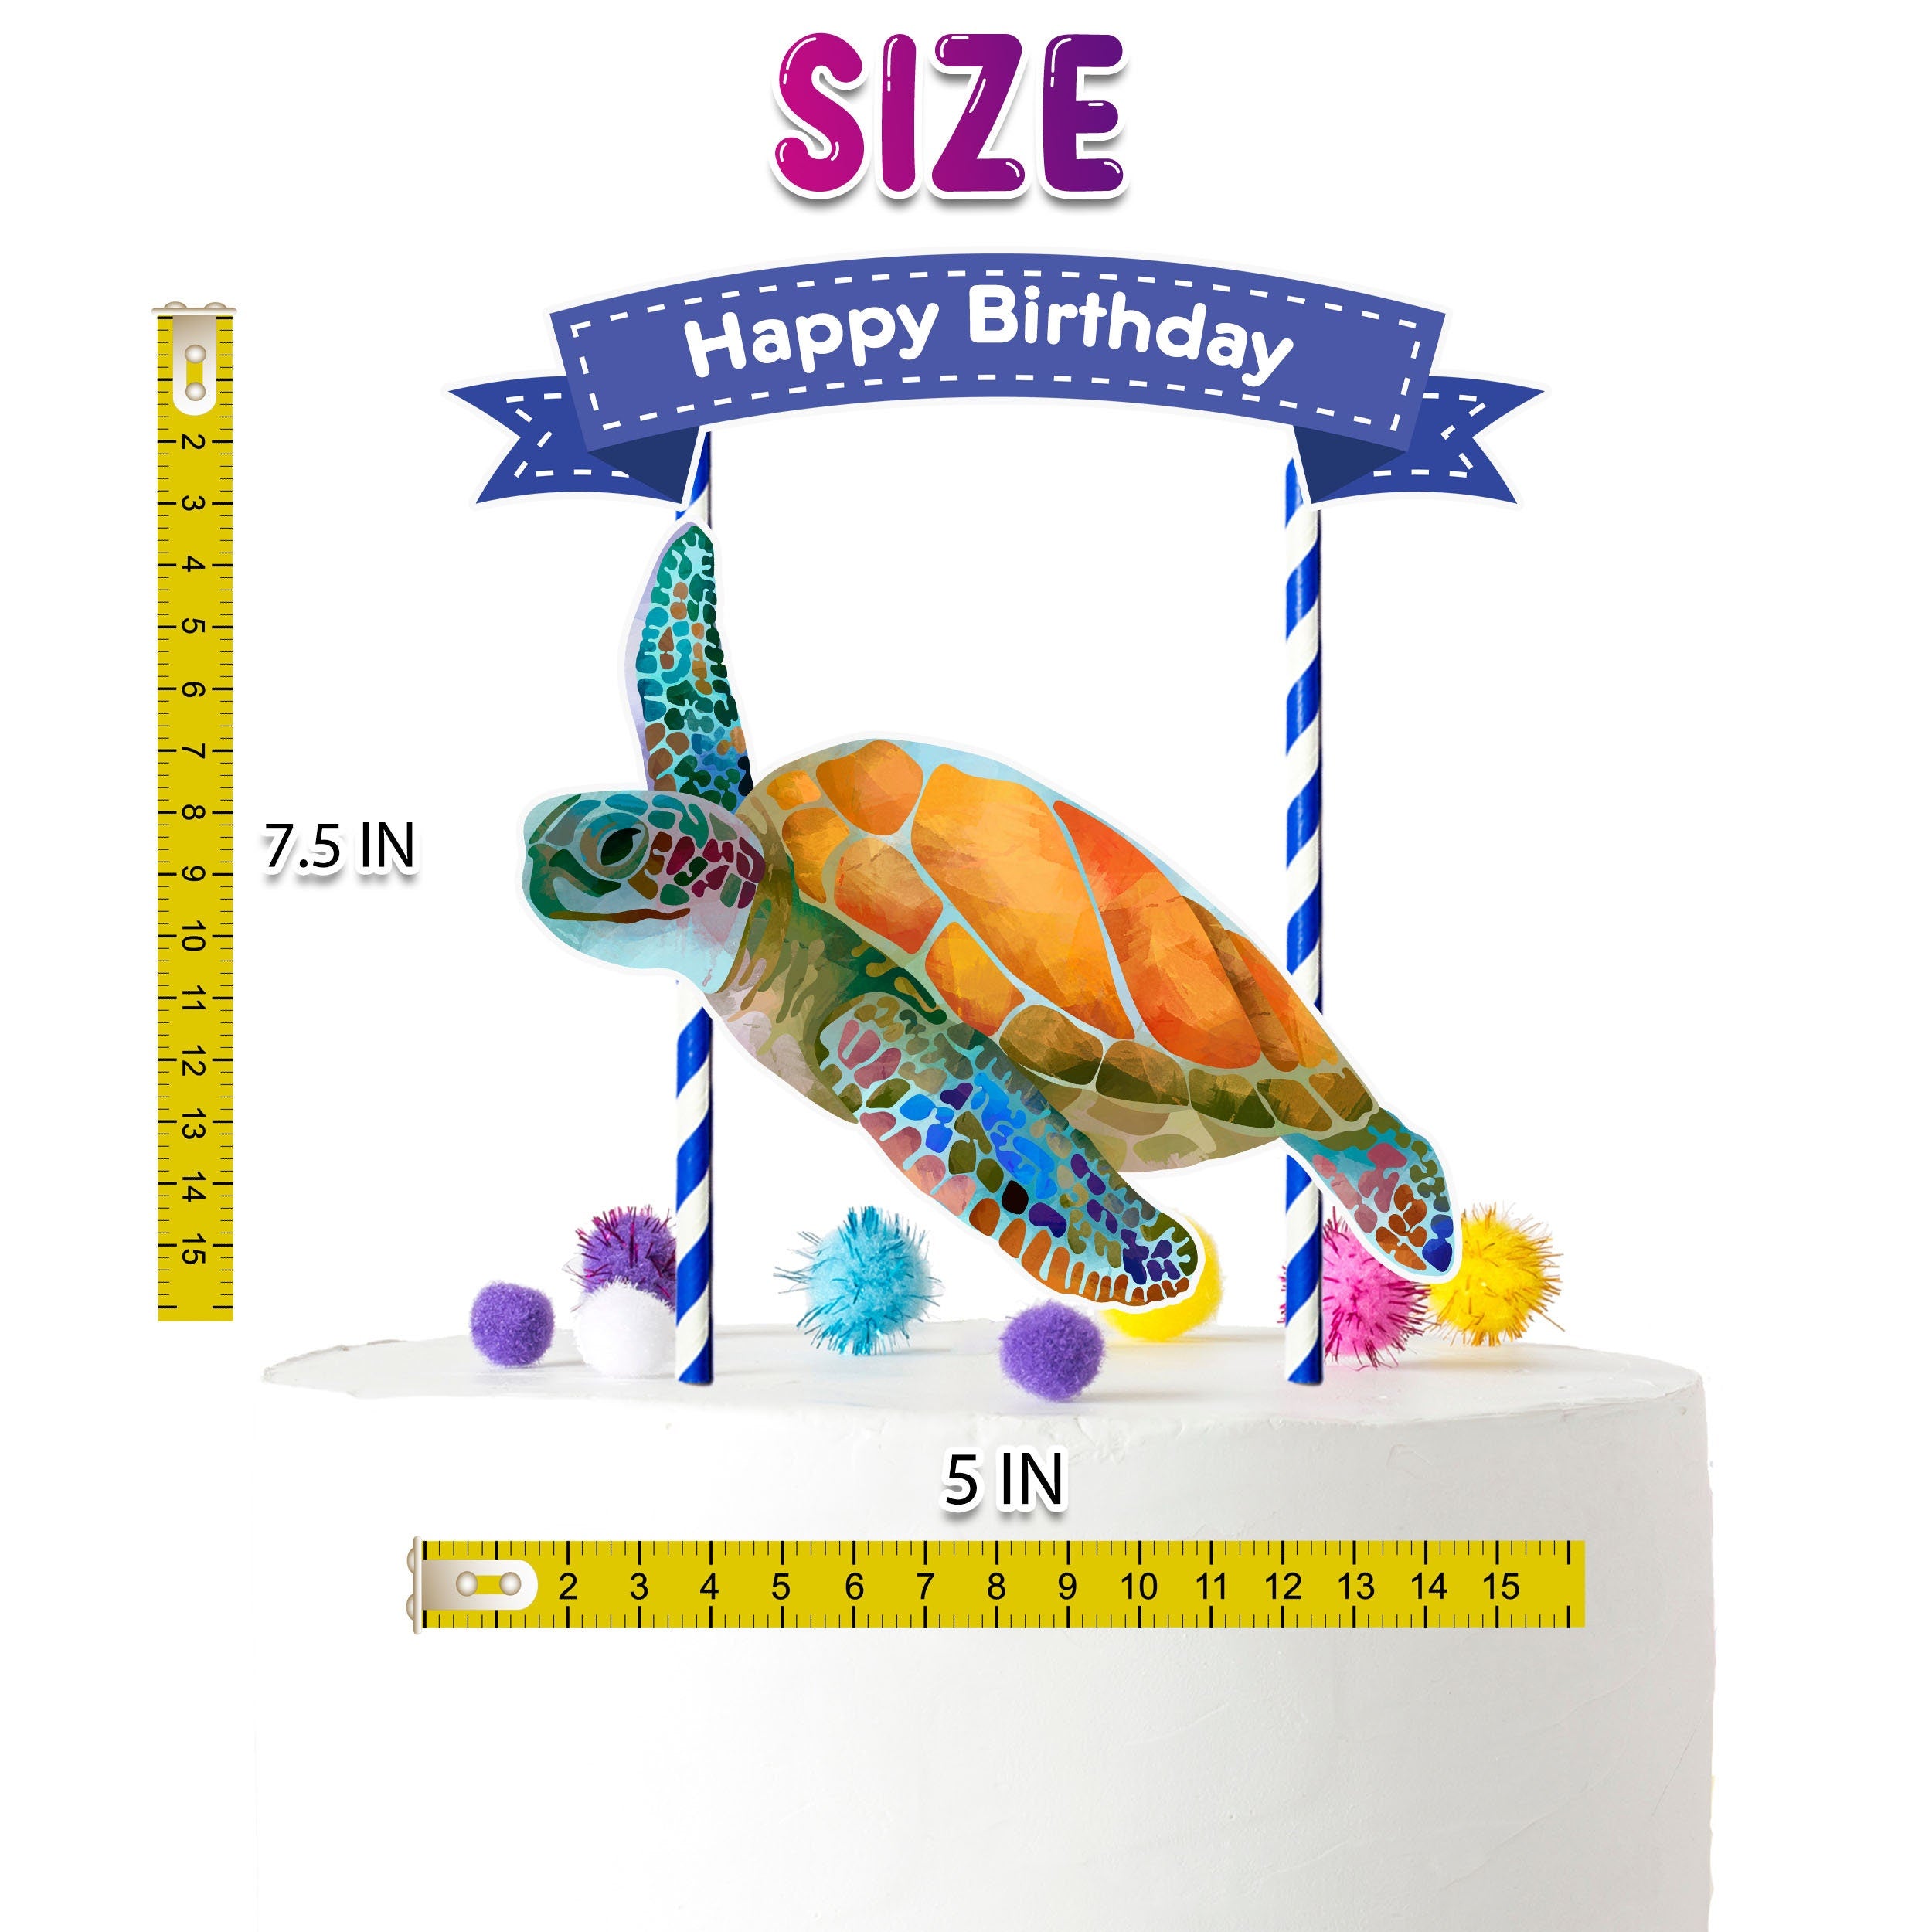 Ocean Explorer - Vibrant Sea Turtle Cartoon Cake Topper for Birthday Celebrations